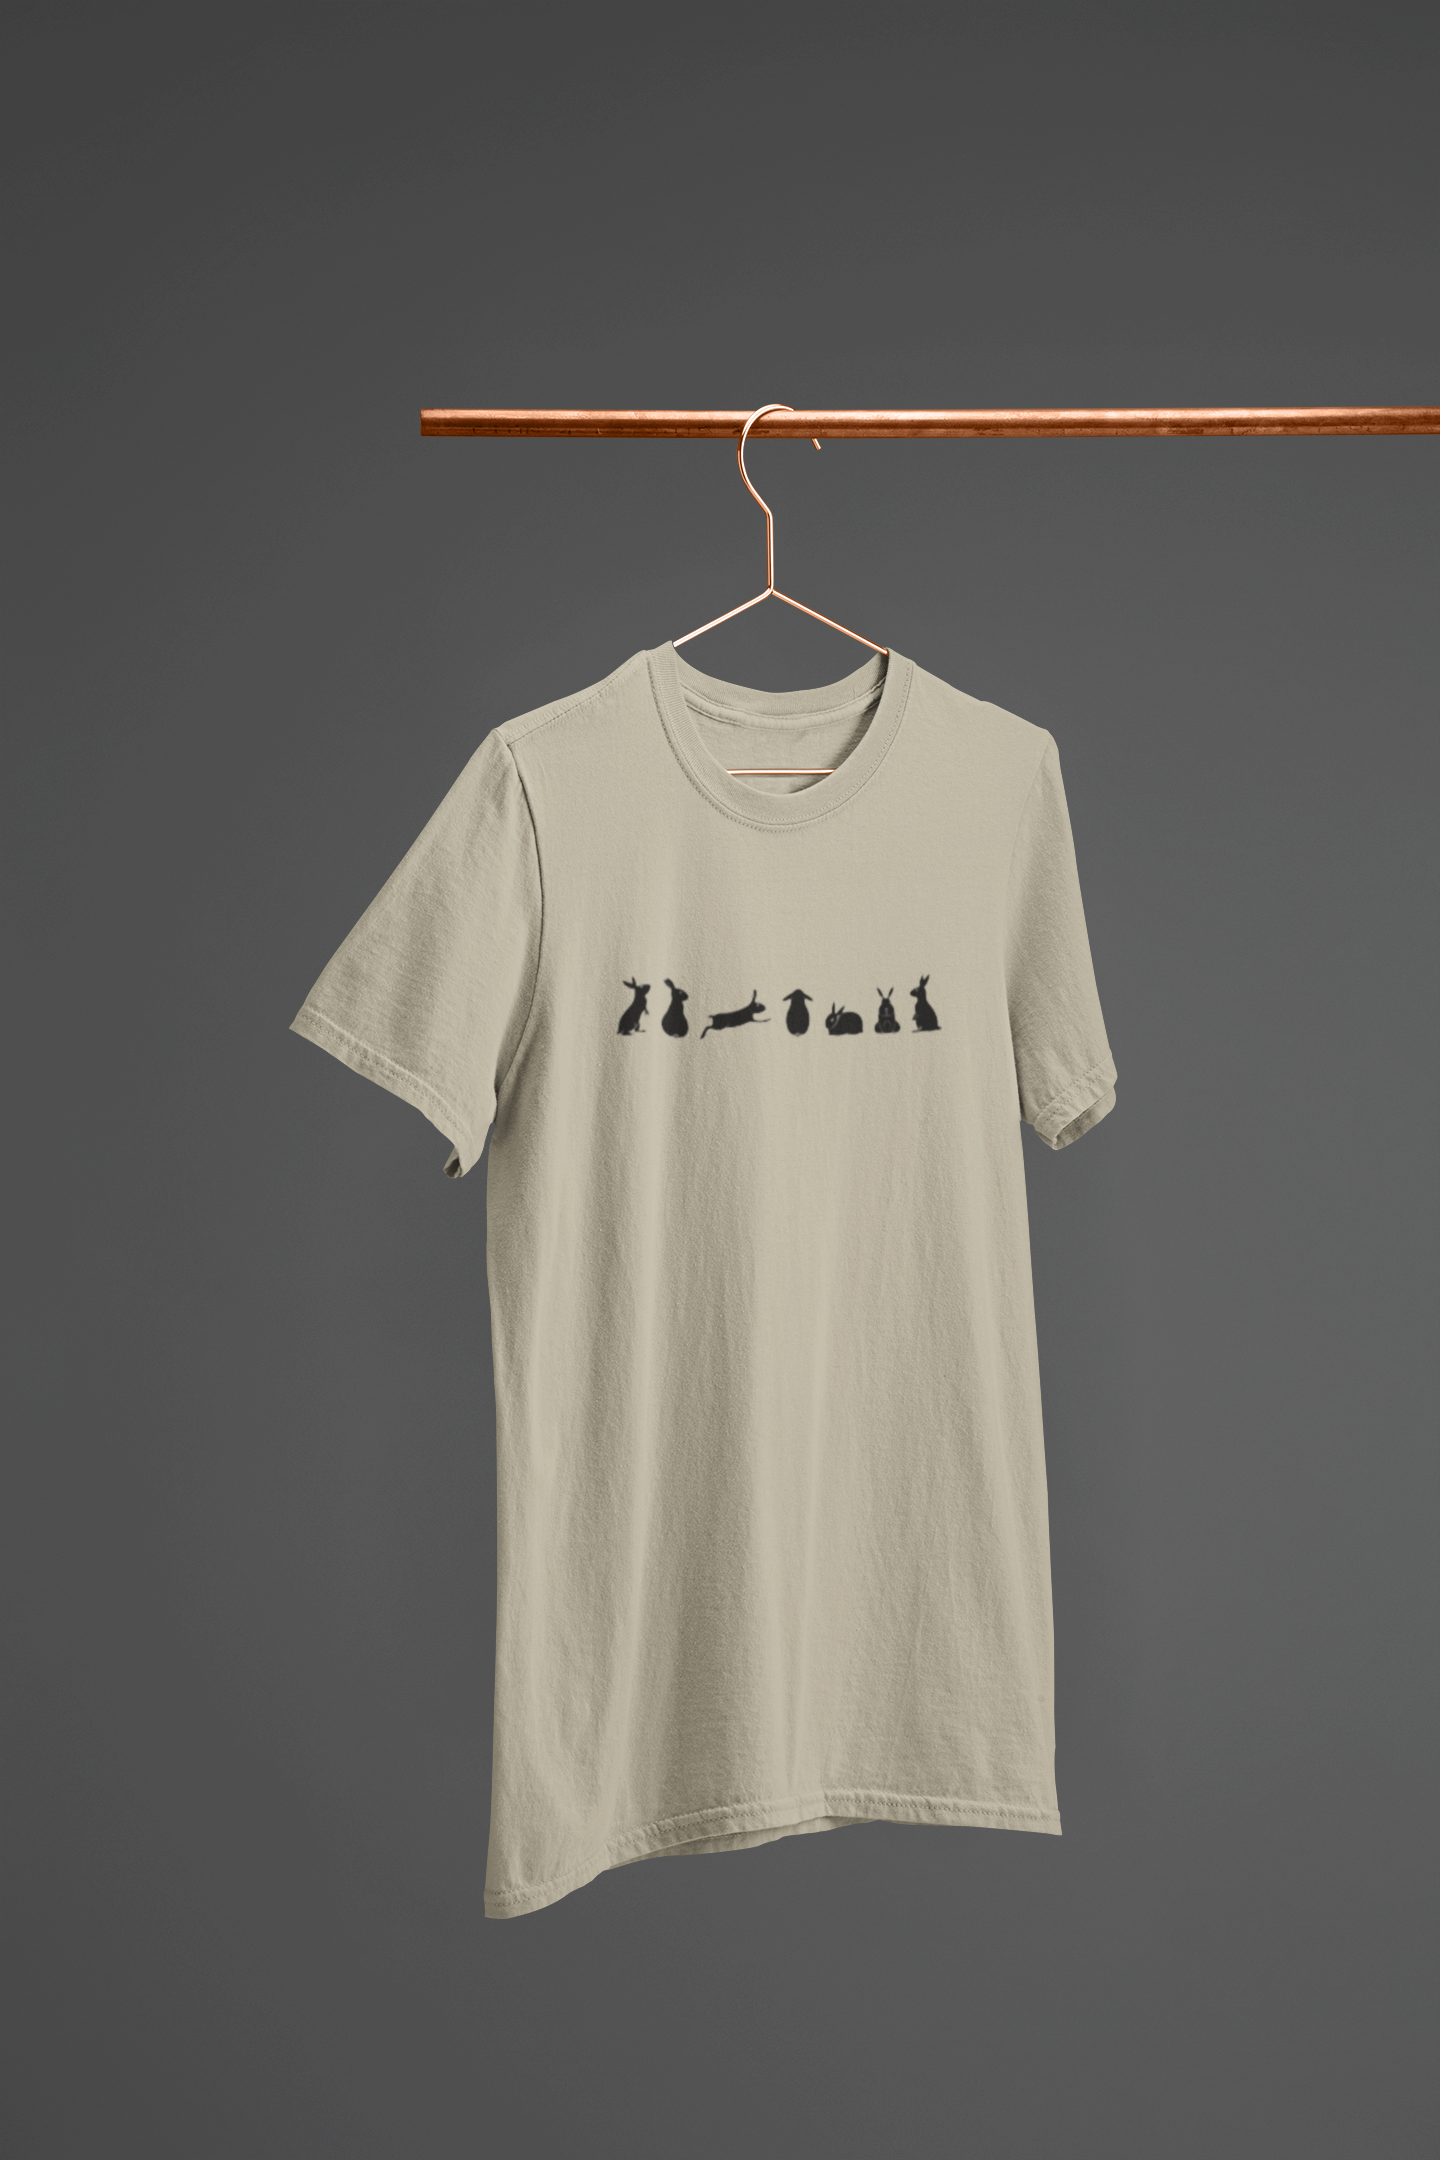 EASTER RABBITS Men’s 100% Cotton T-Shirt